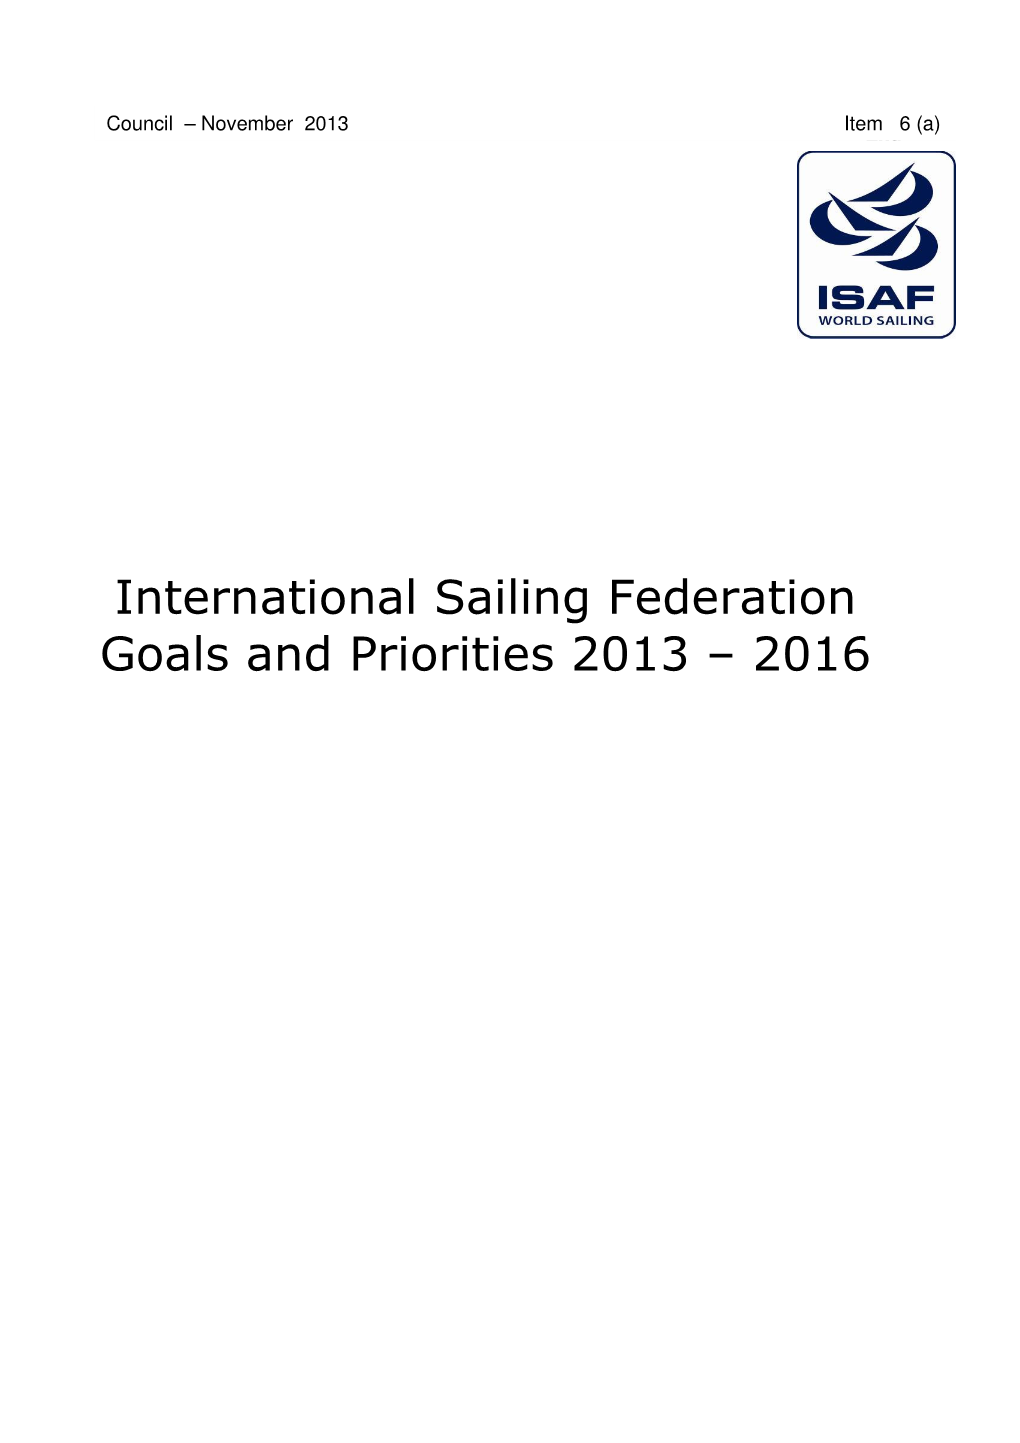 International Sailing Federation Goals and Priorities 2013 – 2016